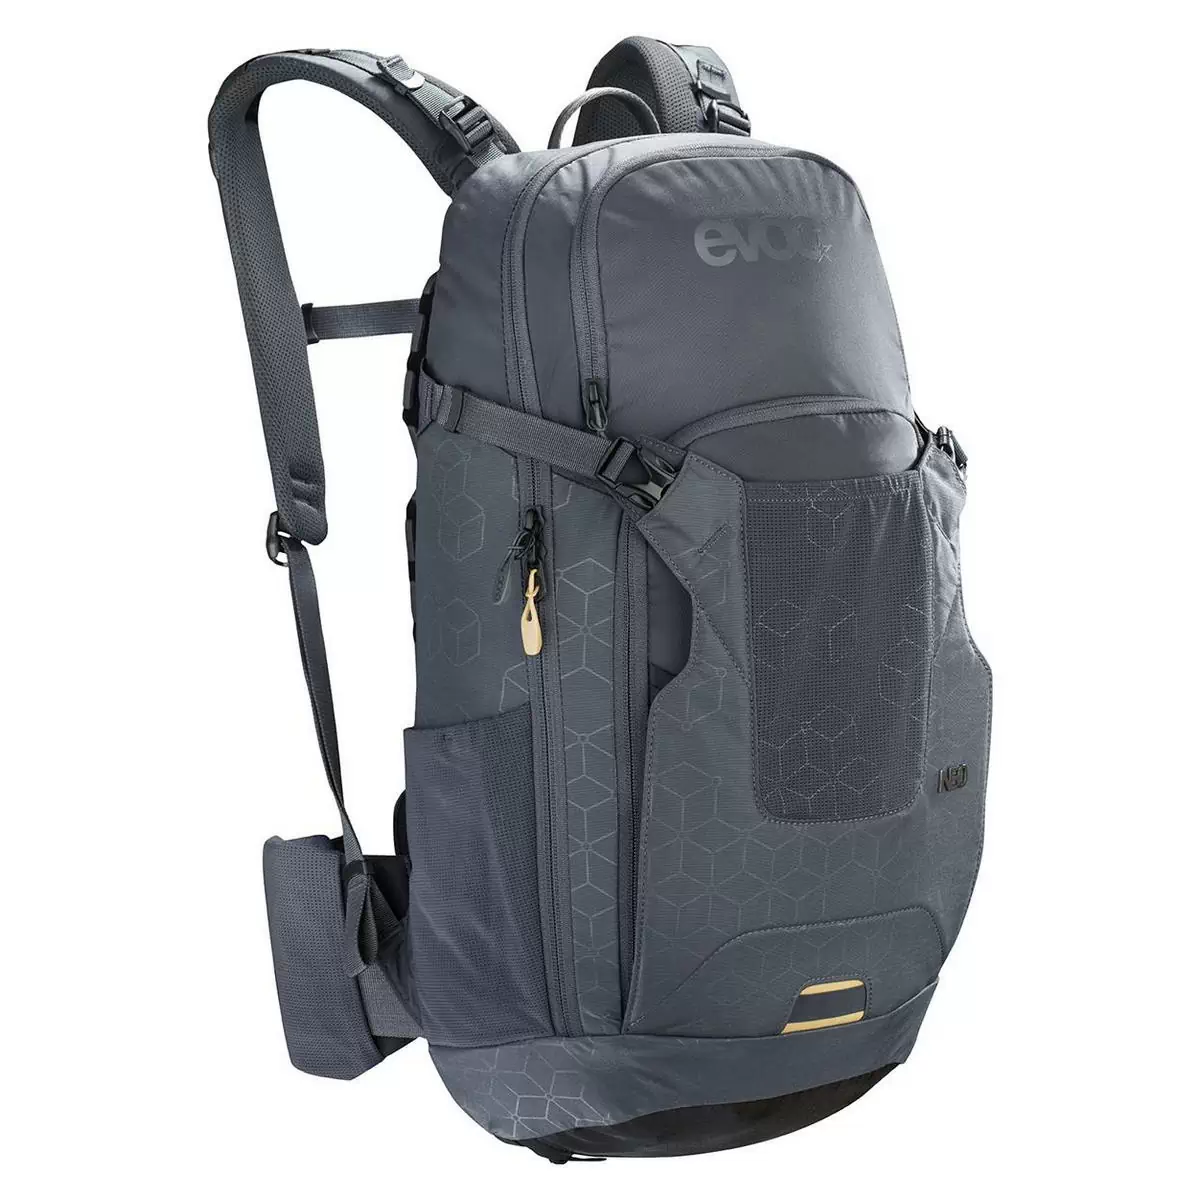 Backpack Neo 16 lt carbon grey size L/XL - image